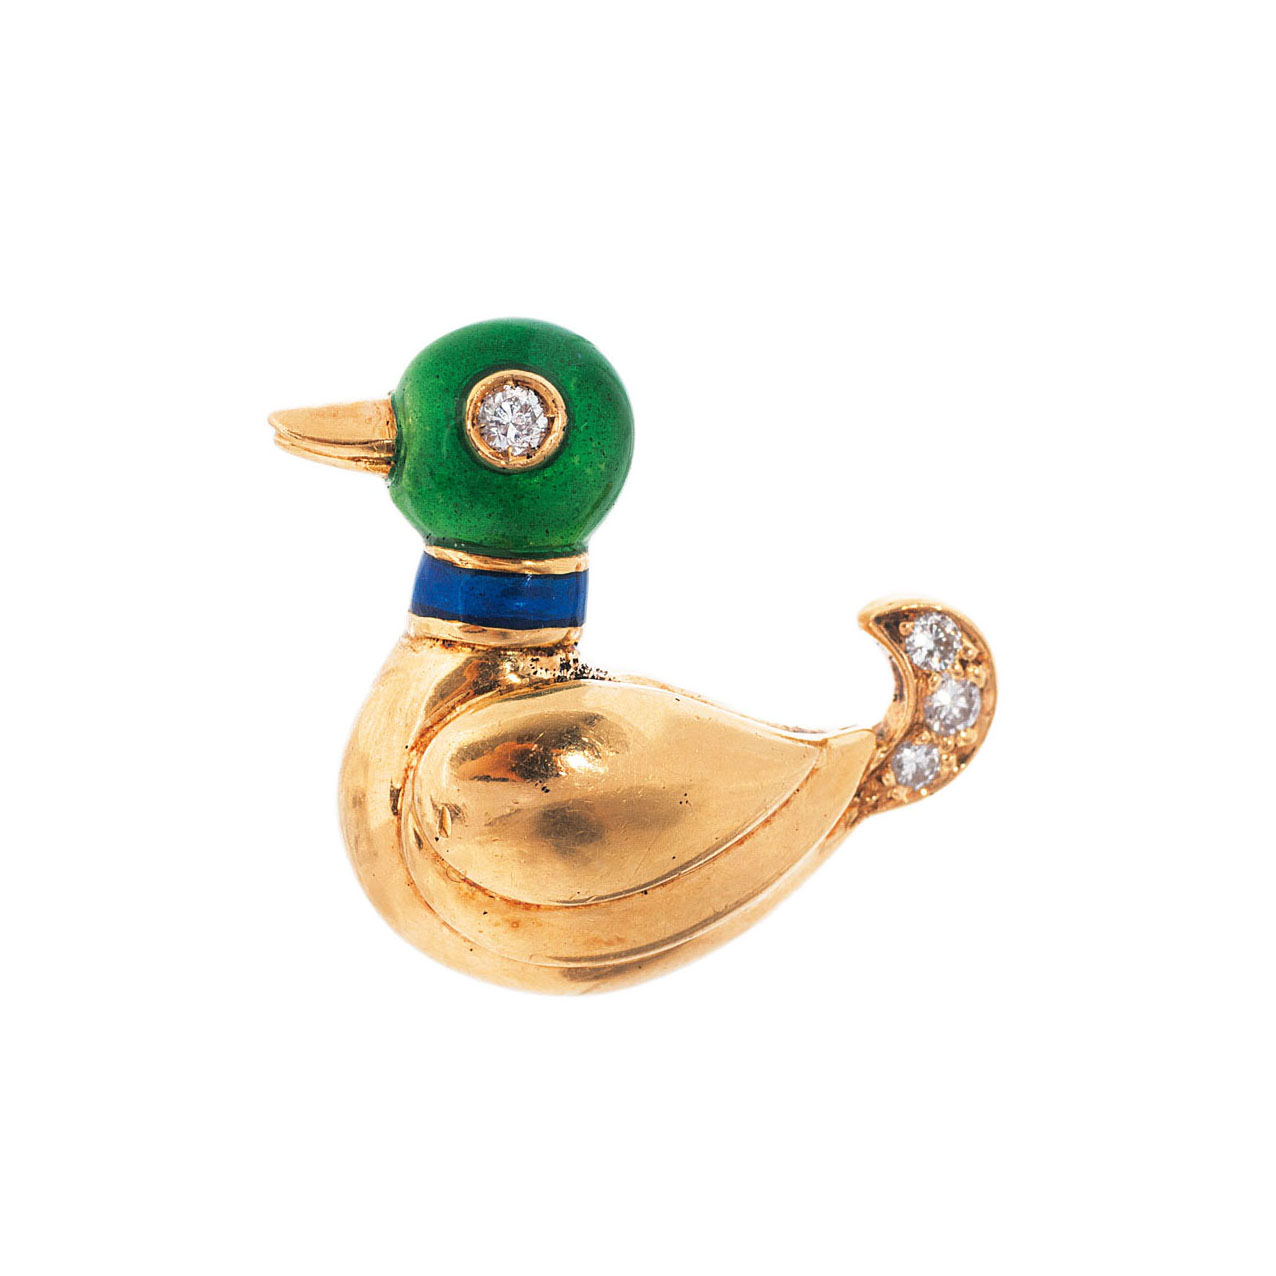 A small enamel diamond pin 'Duck' by Cartier